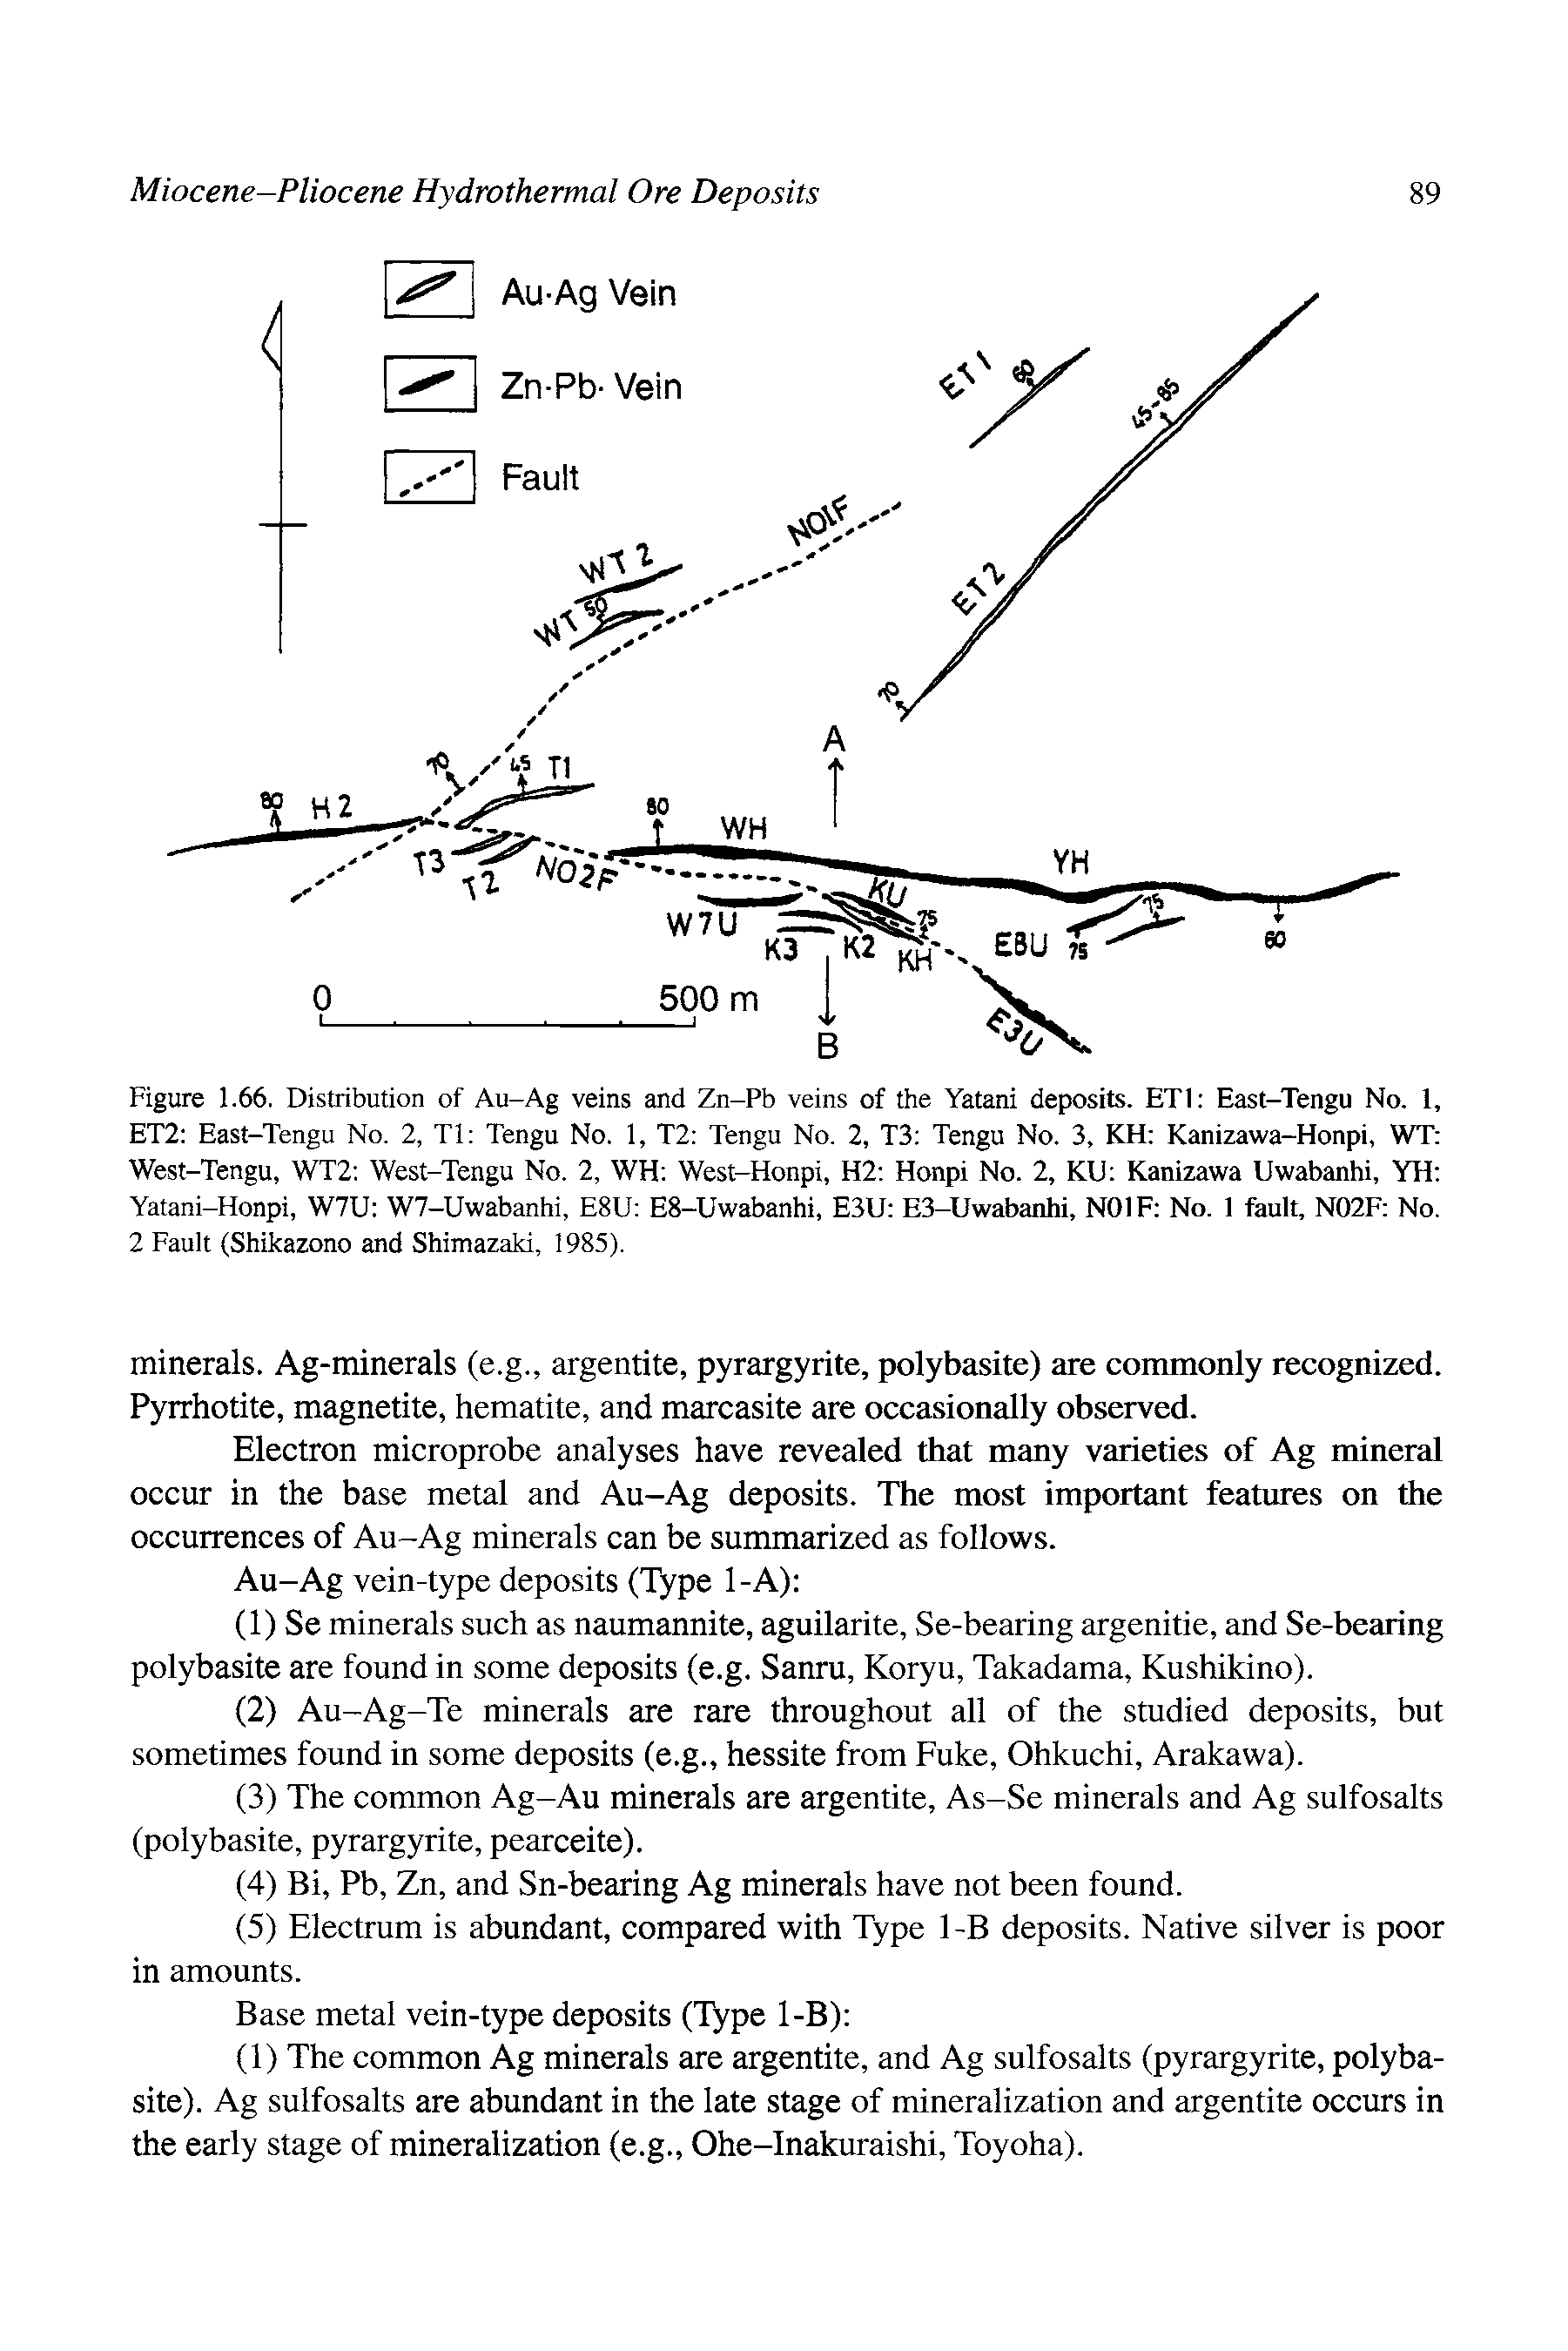 Figure 1.66. Distribution of Au-Ag veins and Zn-Pb veins of the Yatani deposits. ETI East-Tengu No. 1, ET2 East-Tengu No. 2, Tl Tengu No. 1, T2 Tengu No. 2, T3 Tengu No. 3, KH Kanizawa-Honpi, WT West-Tengu, WT2 West-Tengu No. 2, WH West-Honpi, H2 Honpi No. 2, KU Kanizawa Uwabanhi, YH Yatani-Honpi, W7U W7-Uwabanhi, E8U E8-Uwabanhi, E3U E3-Uwabanhi, NOIF No. 1 fault, N02F No. 2 Fault (Shikazono and Shimazaki, 1985).